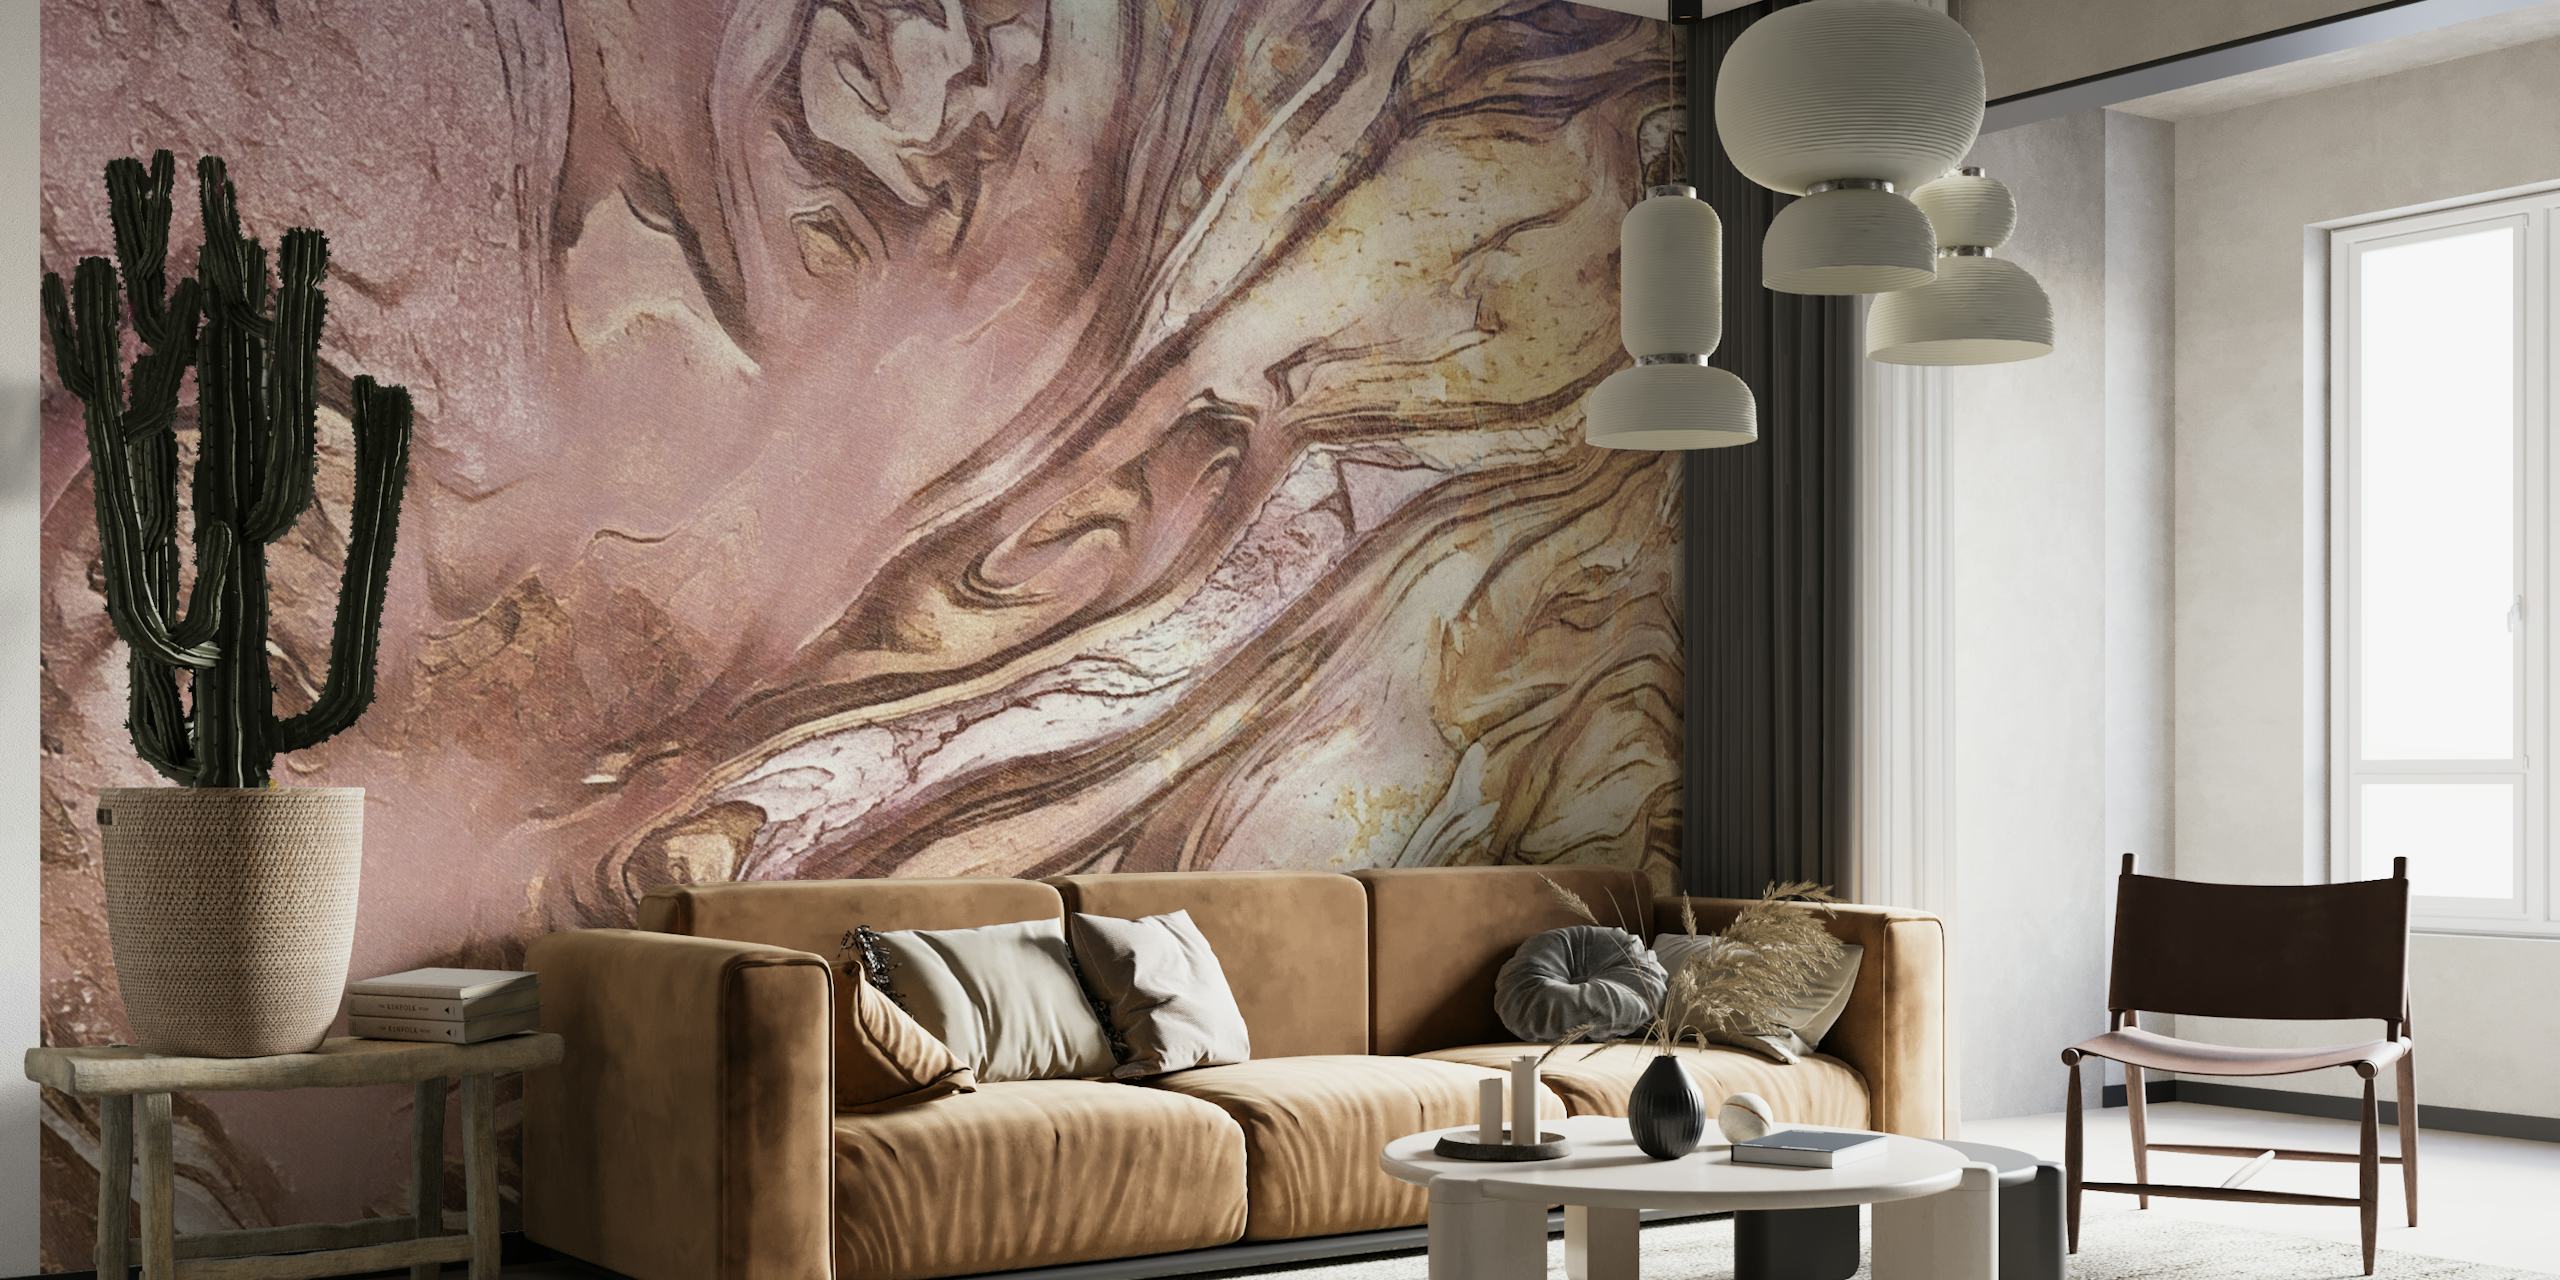 Blush and gold swirls wall mural creating a liquid-like texture